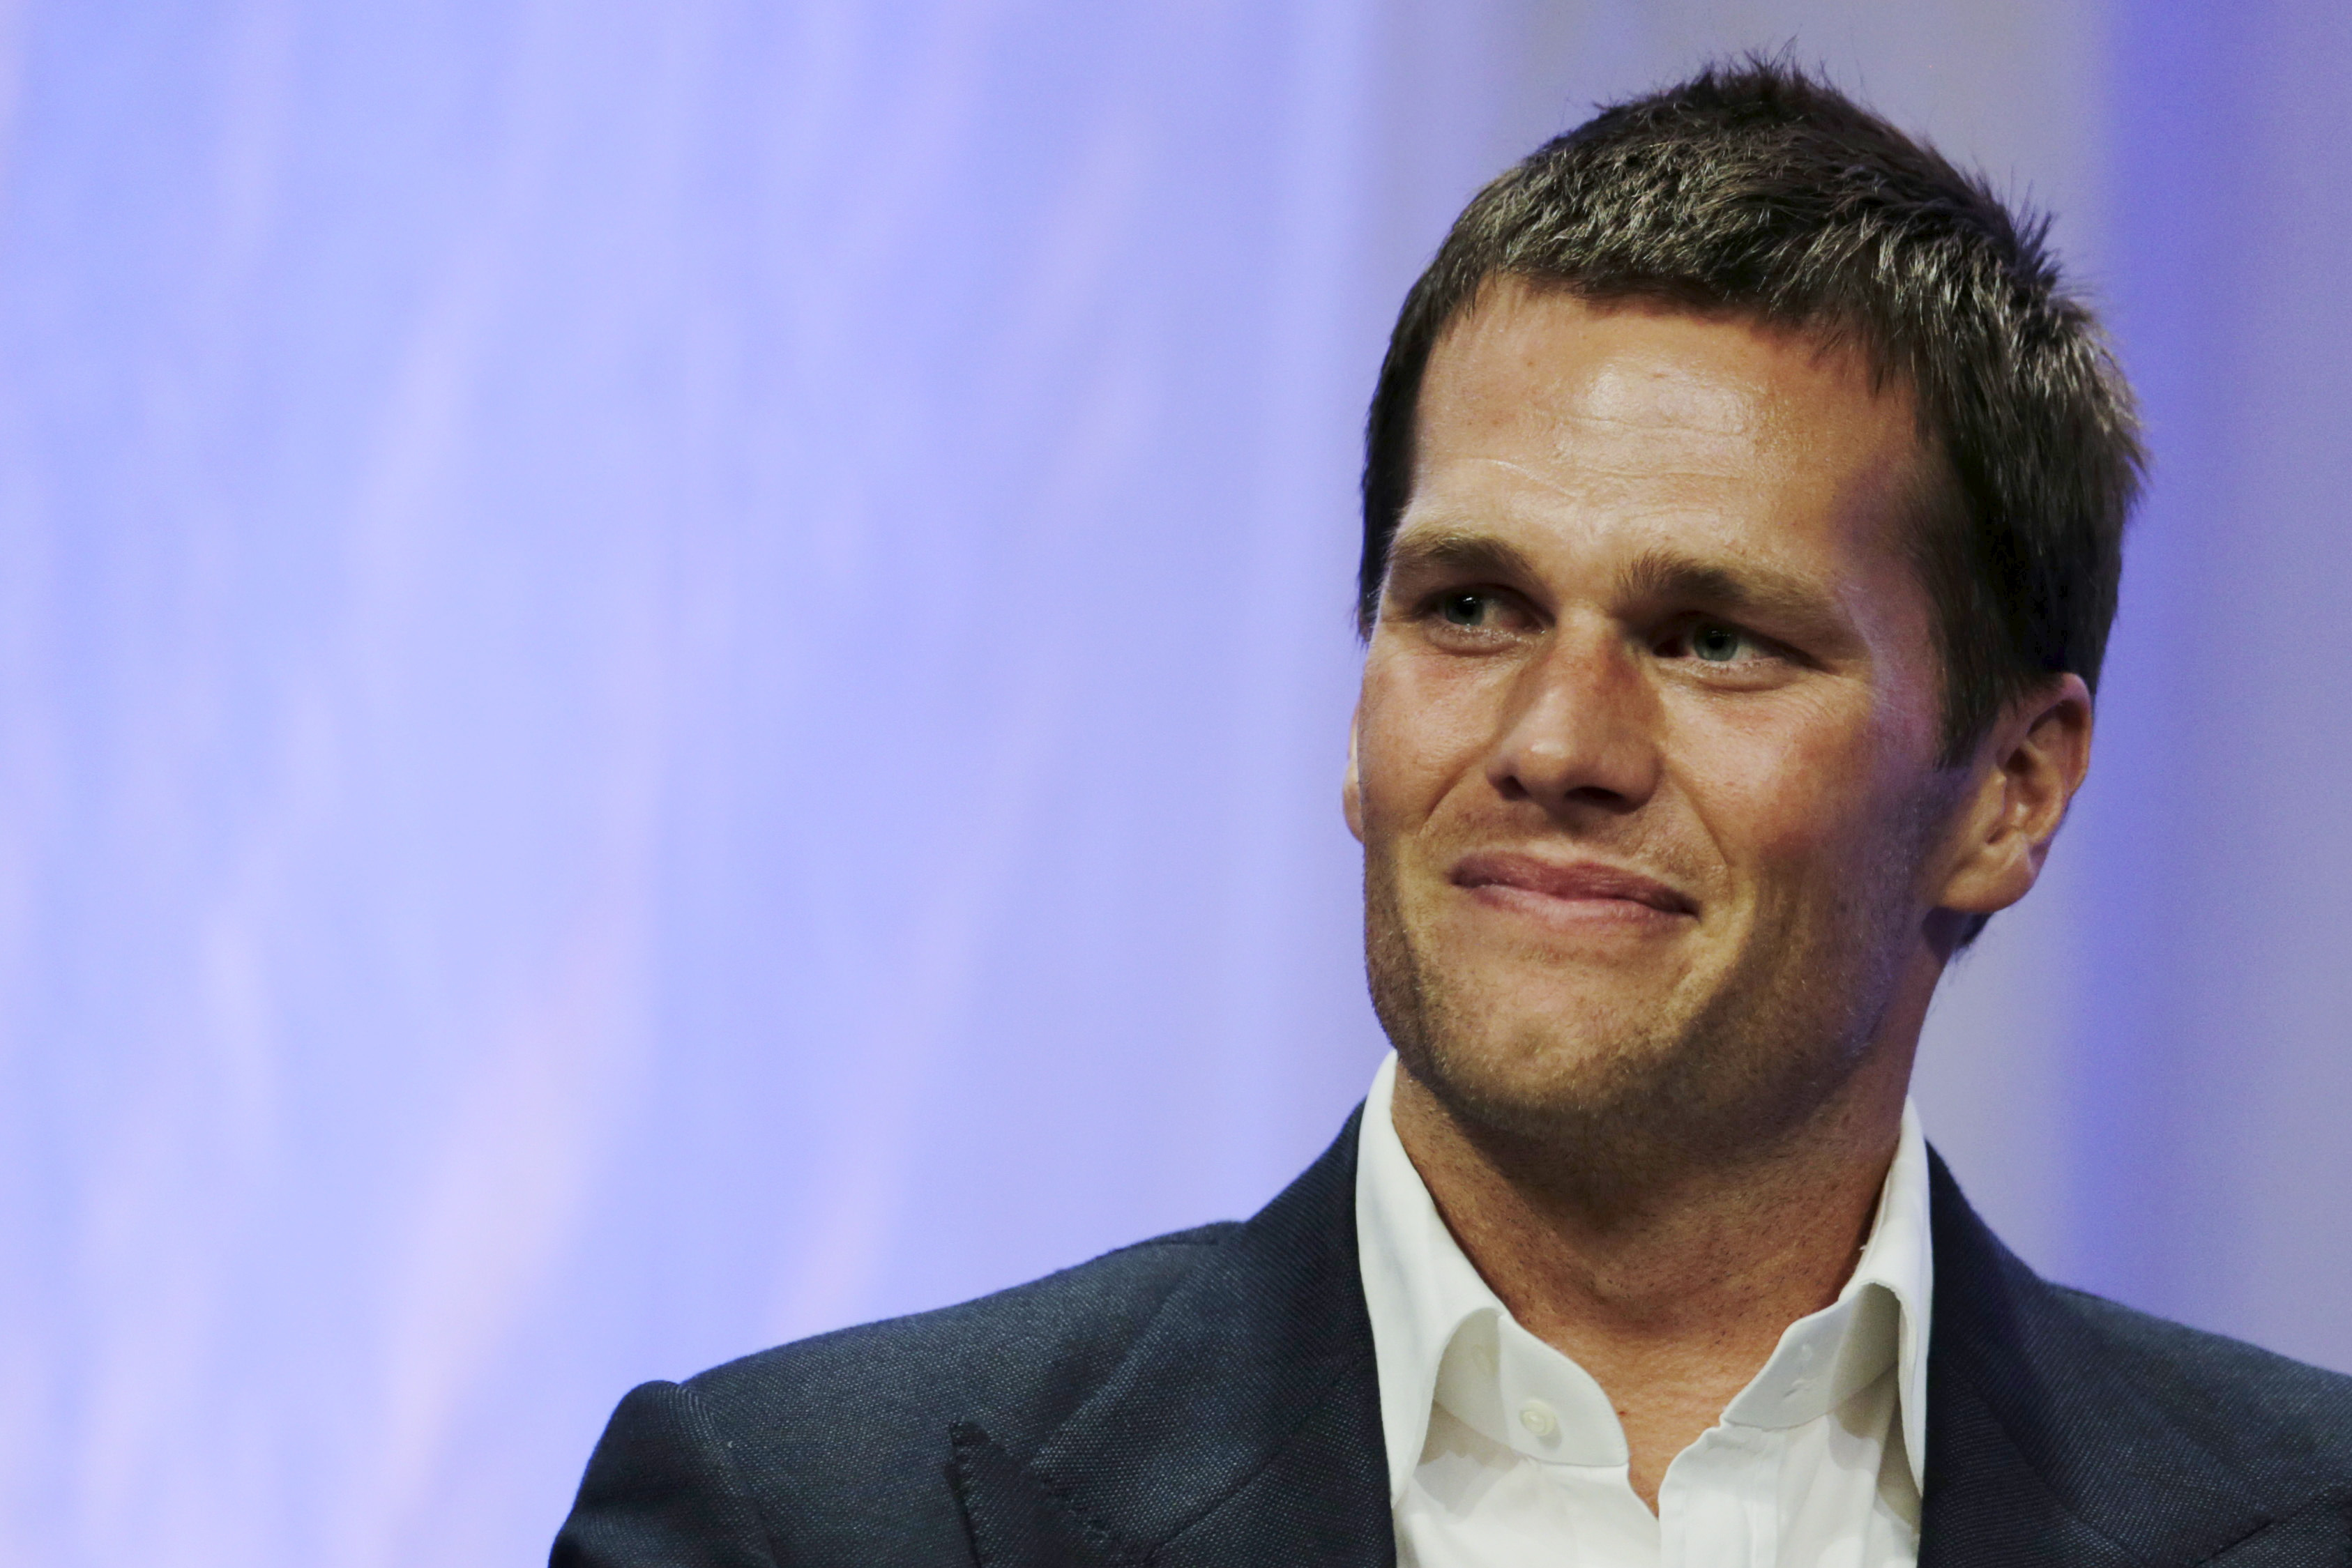 A lot of mediocrity': Tom Brady criticizes level of NFL play